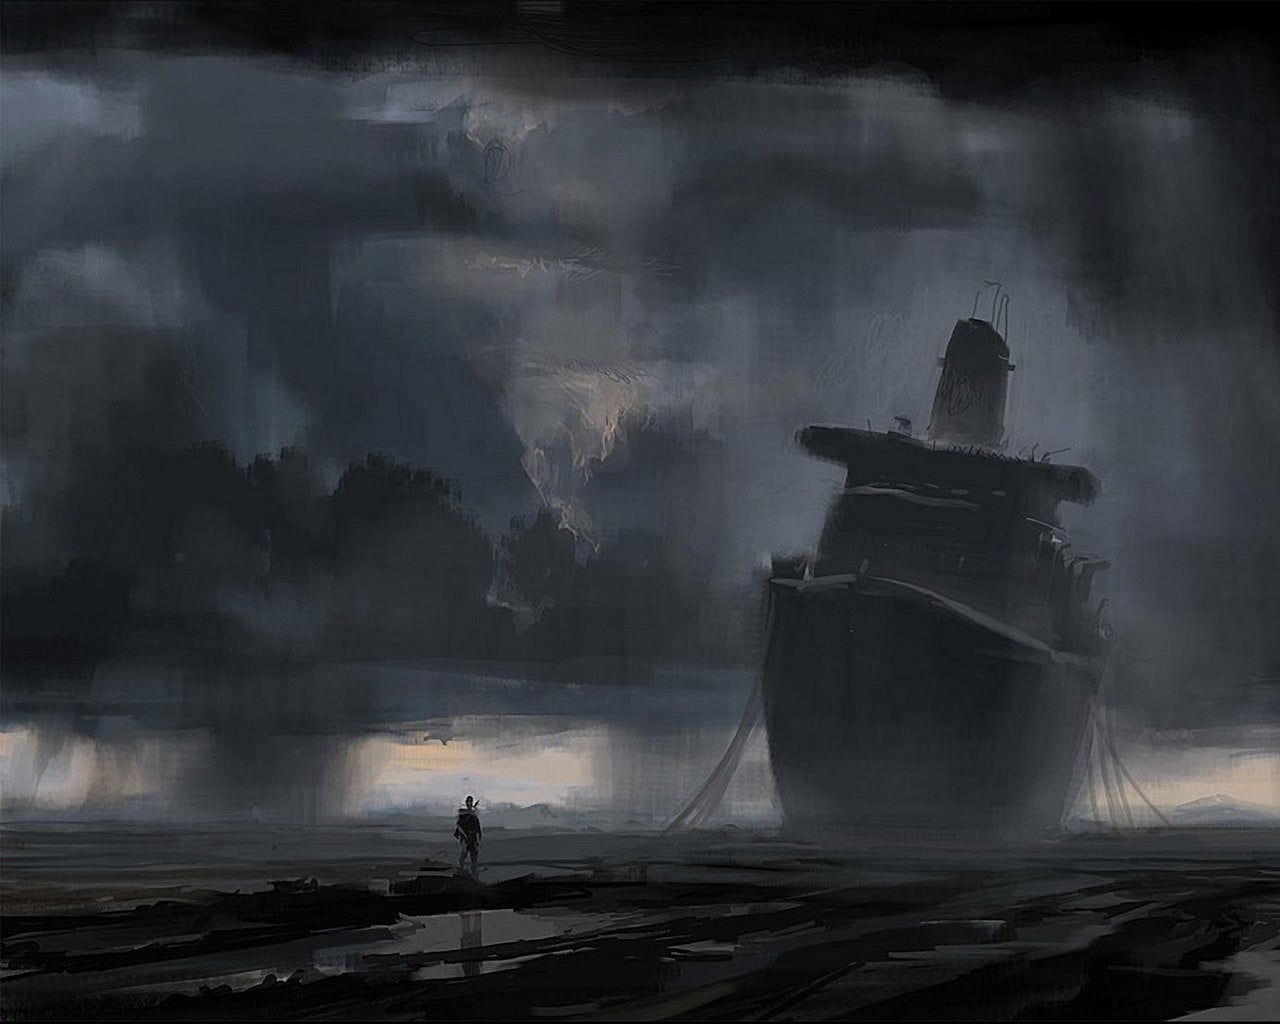 Sail Ship Beside Man Walking With Cloudy Sky Painting Clouds Rain Shipwreck Hd Wallpaper Wallpaper Flare